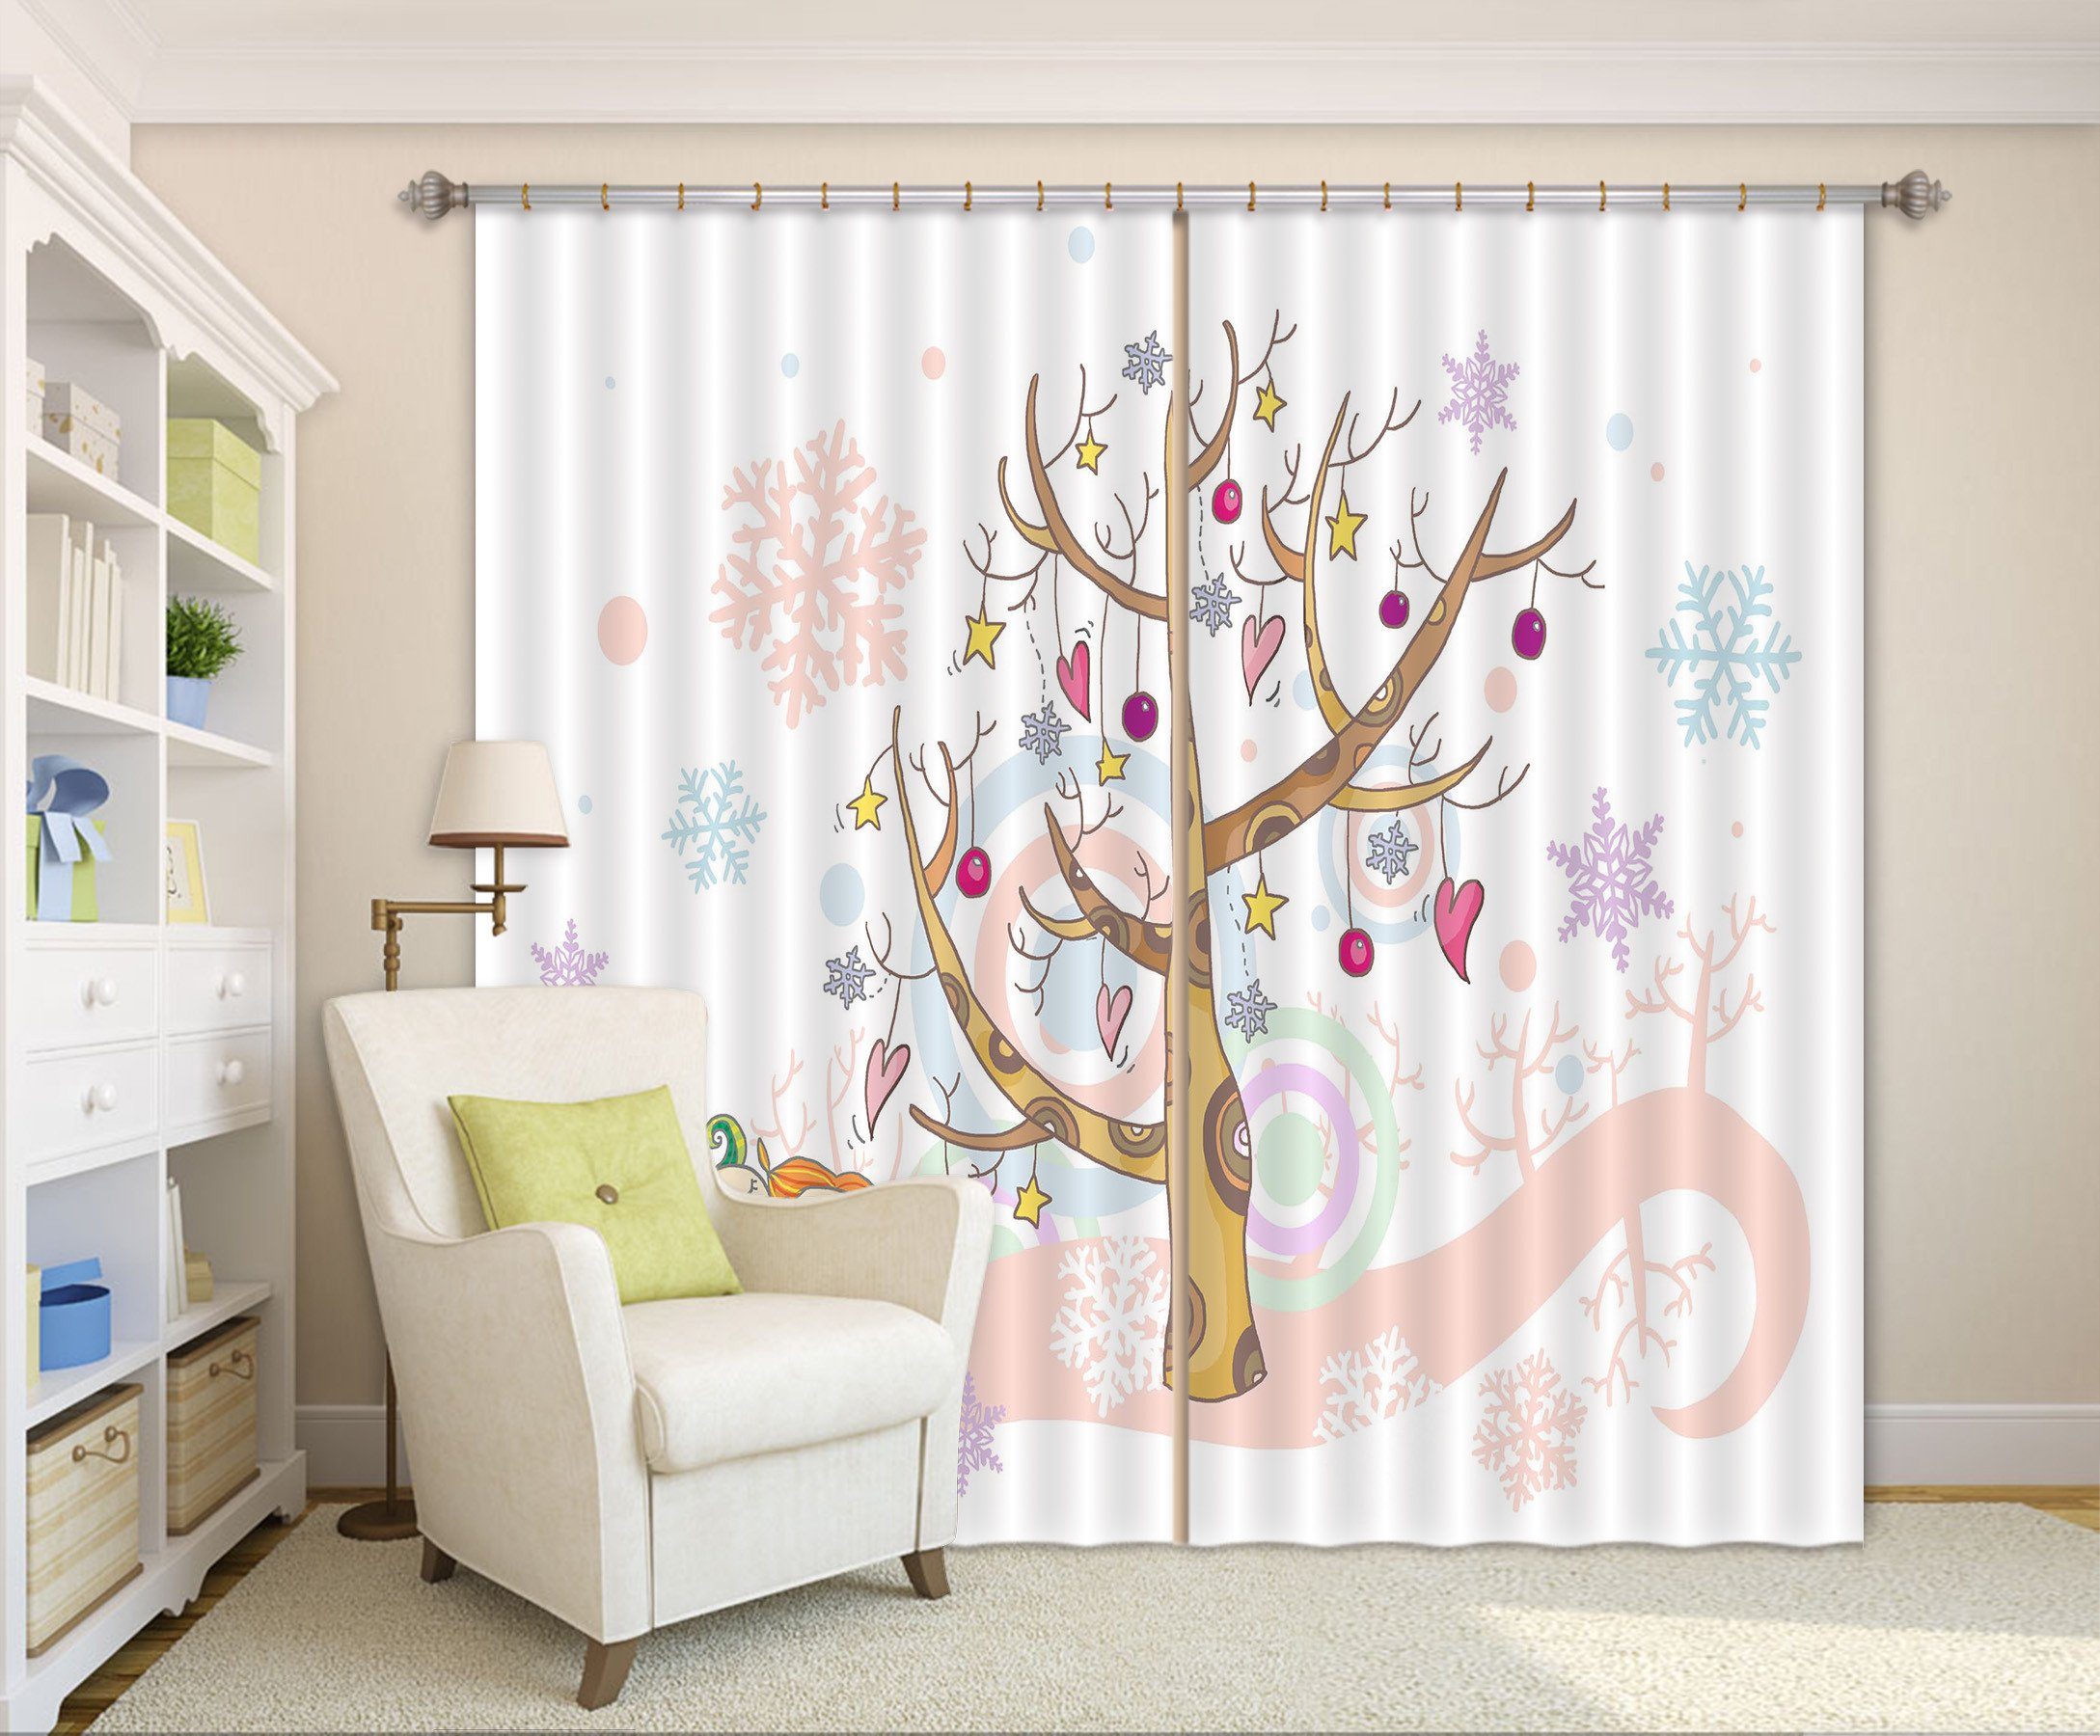 3D Lovers Tree 336 Curtains Drapes Wallpaper AJ Wallpaper 